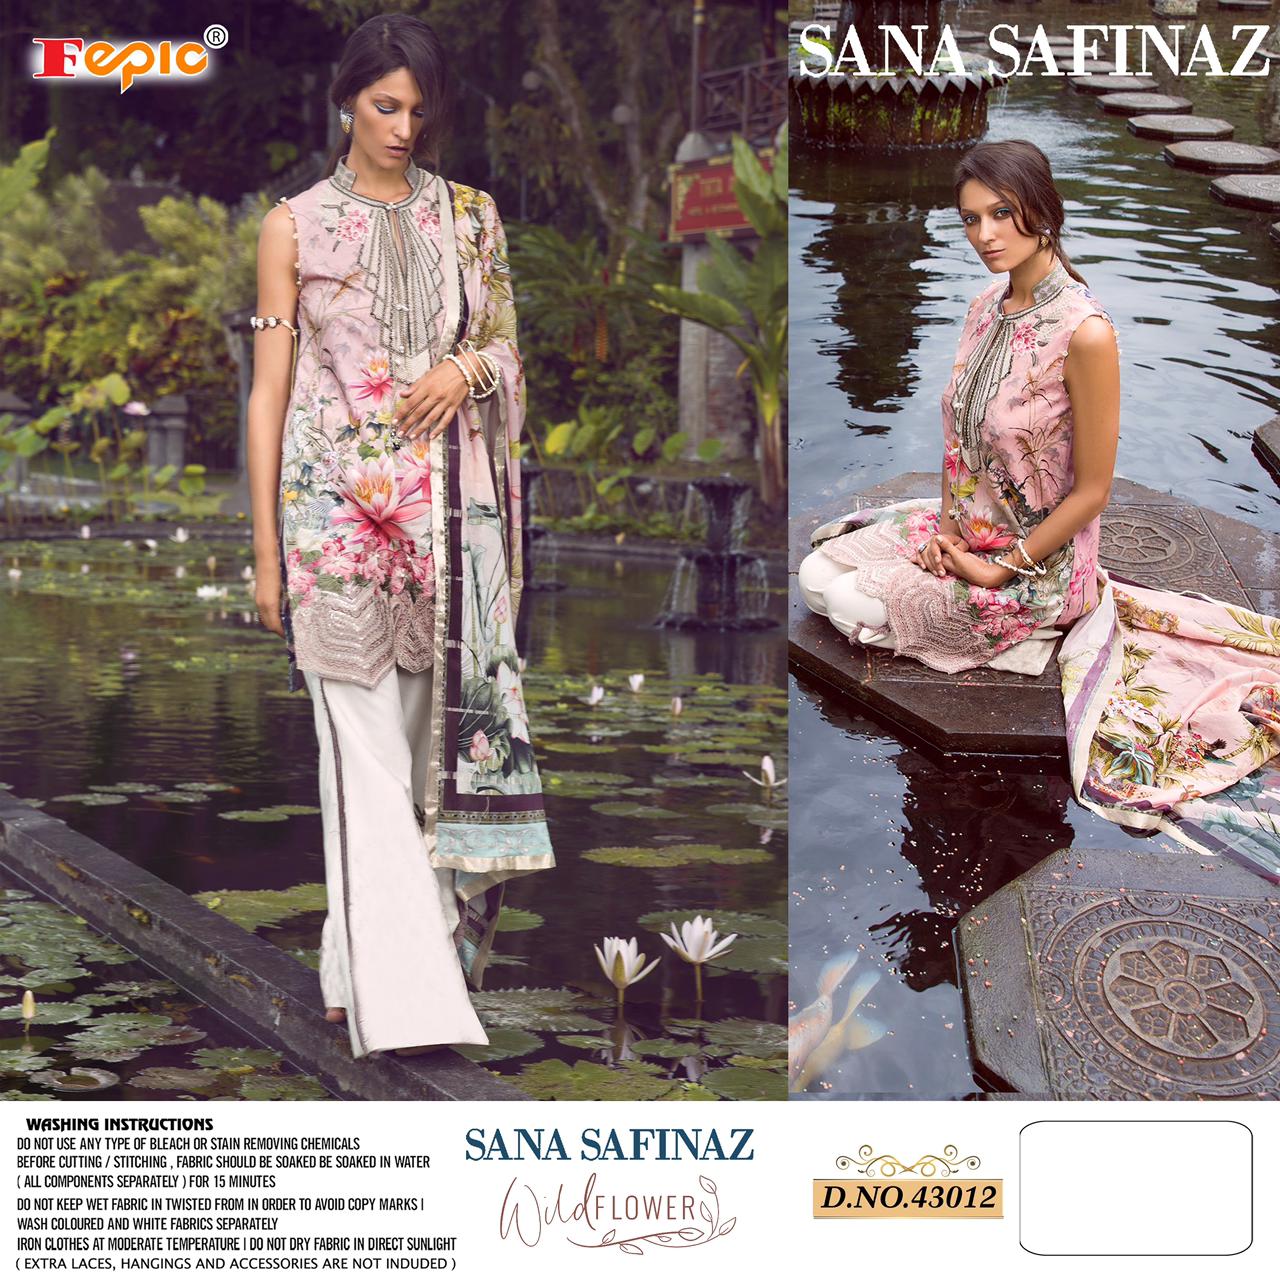 fepic sana safinaz wild flower cambric cotton exclusive print salwar suit catalog